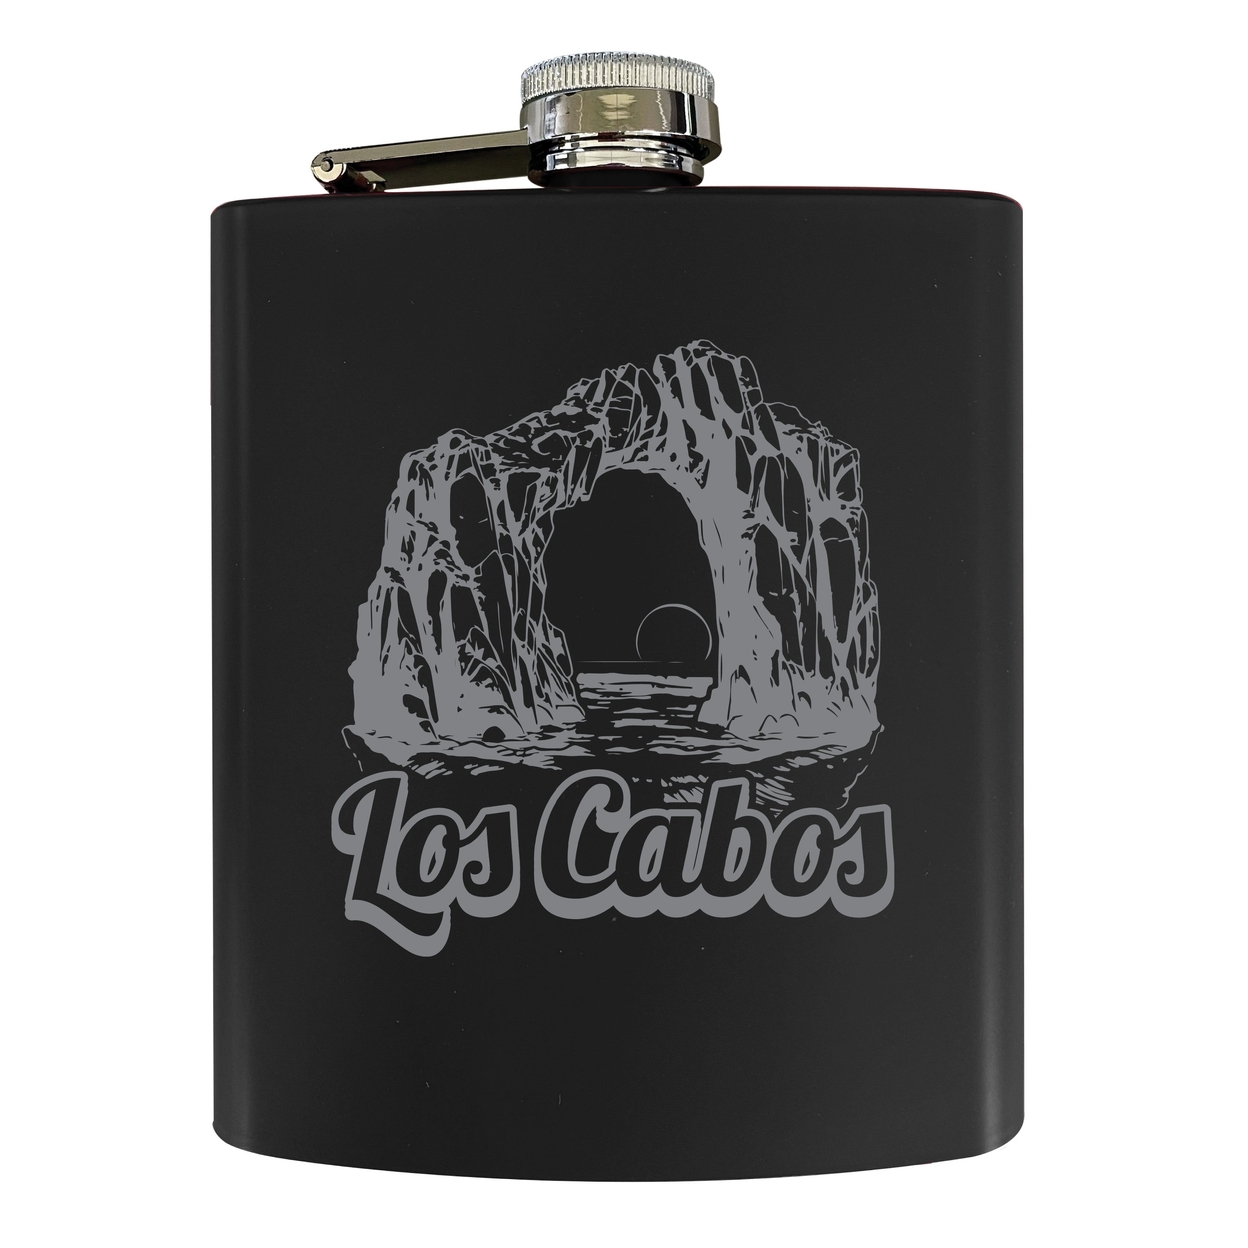 Los Cabos Mexico Souvenir 7 Oz Engraved Steel Flask Matte Finish - Seafoam,,2-Pack